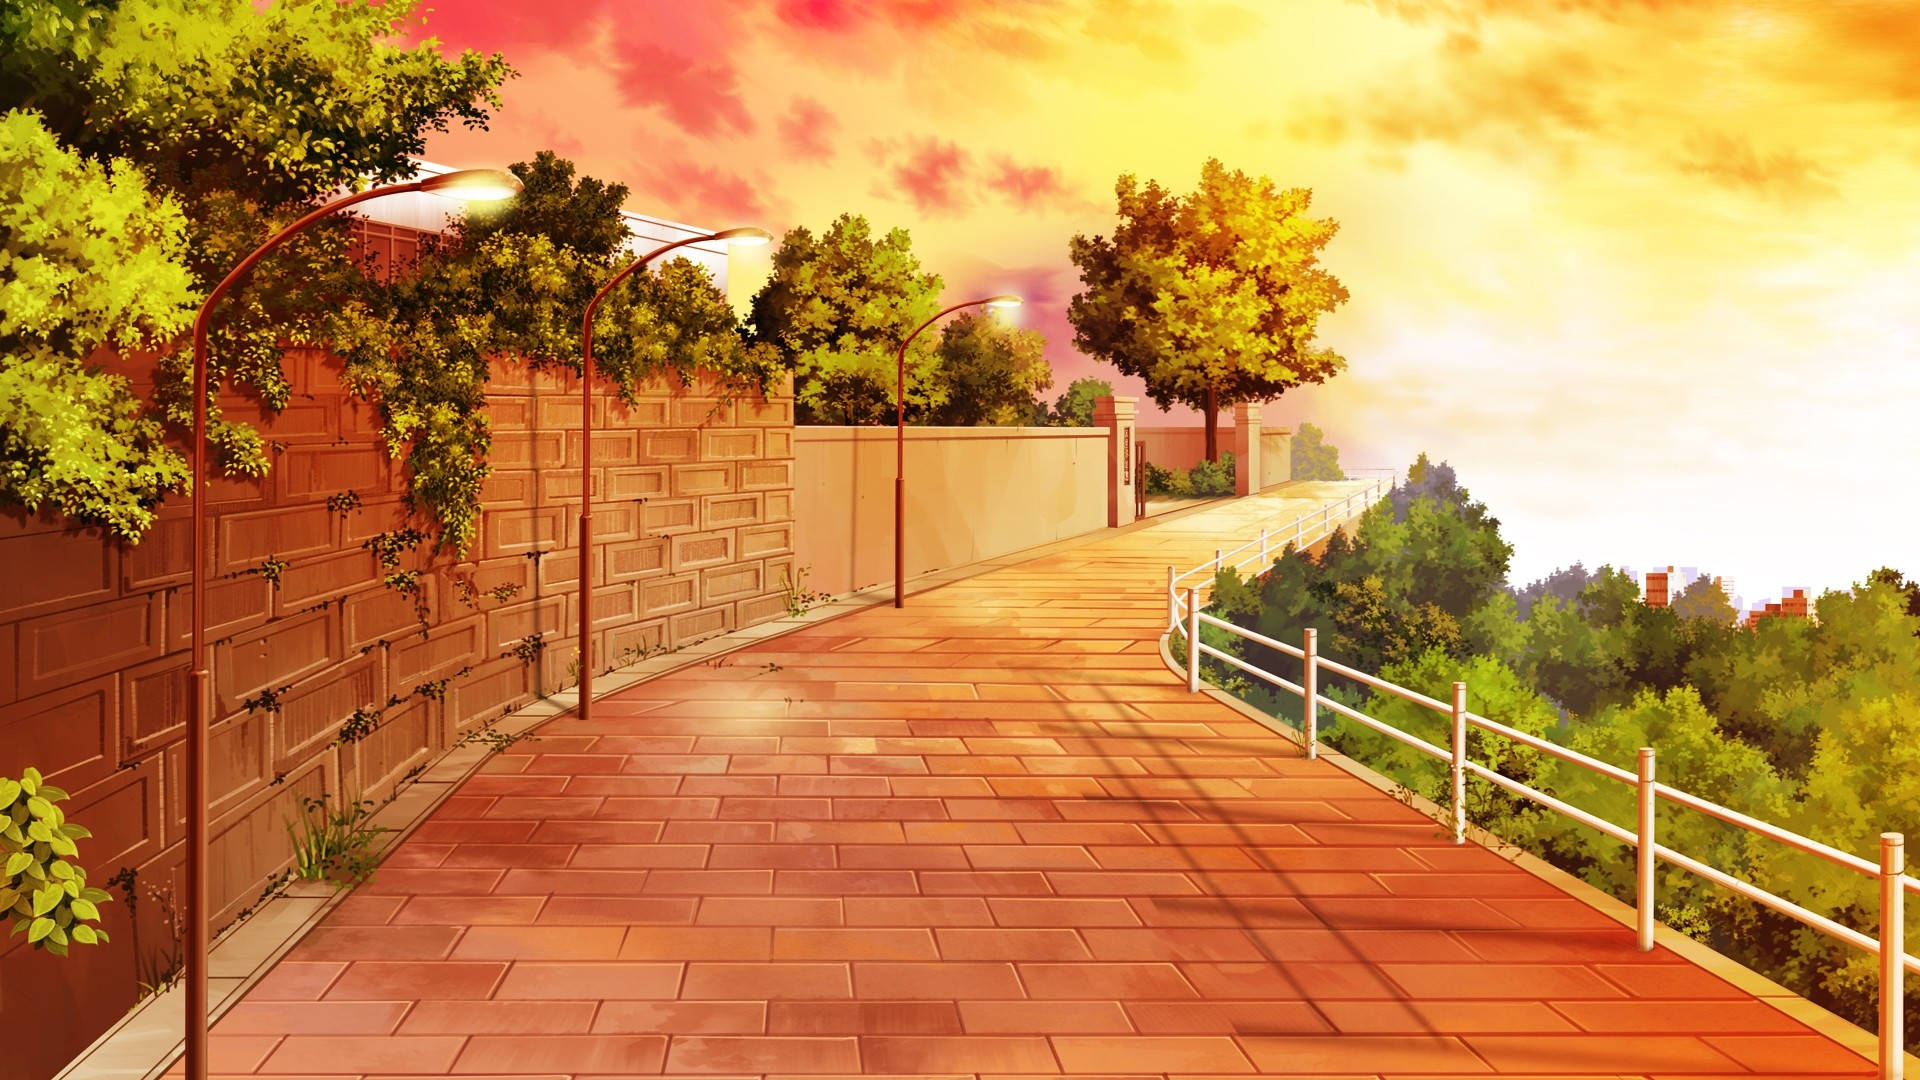 Anime Scenery | Scenery wallpaper, Anime scenery, Anime scenery wallpaper